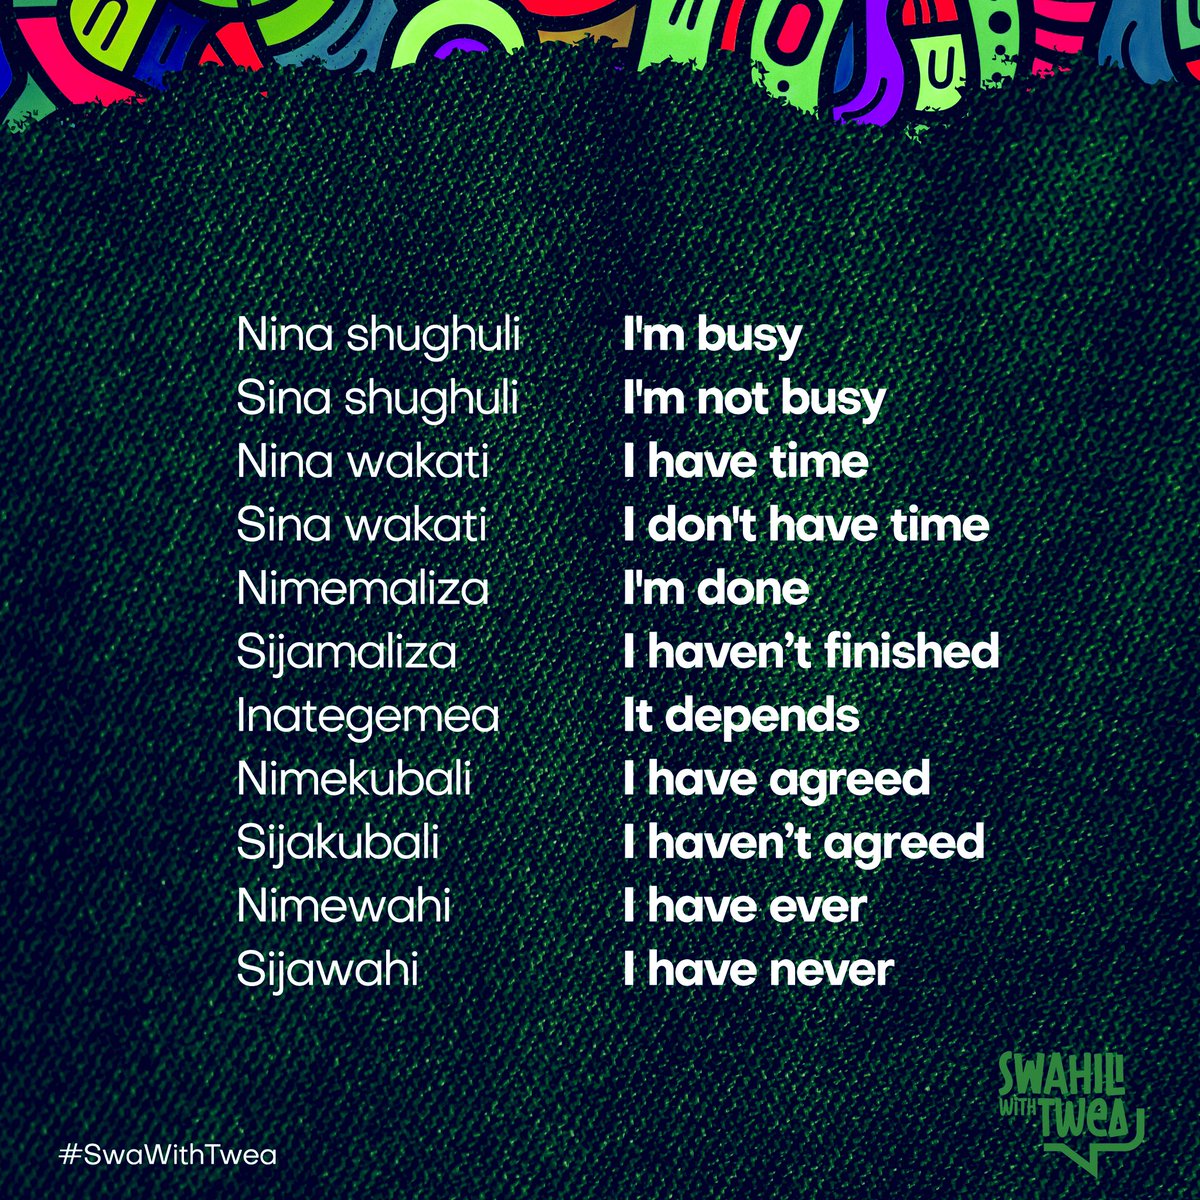 Hamjambo 
Expand your #Swahili diction
#SwaWithTwea